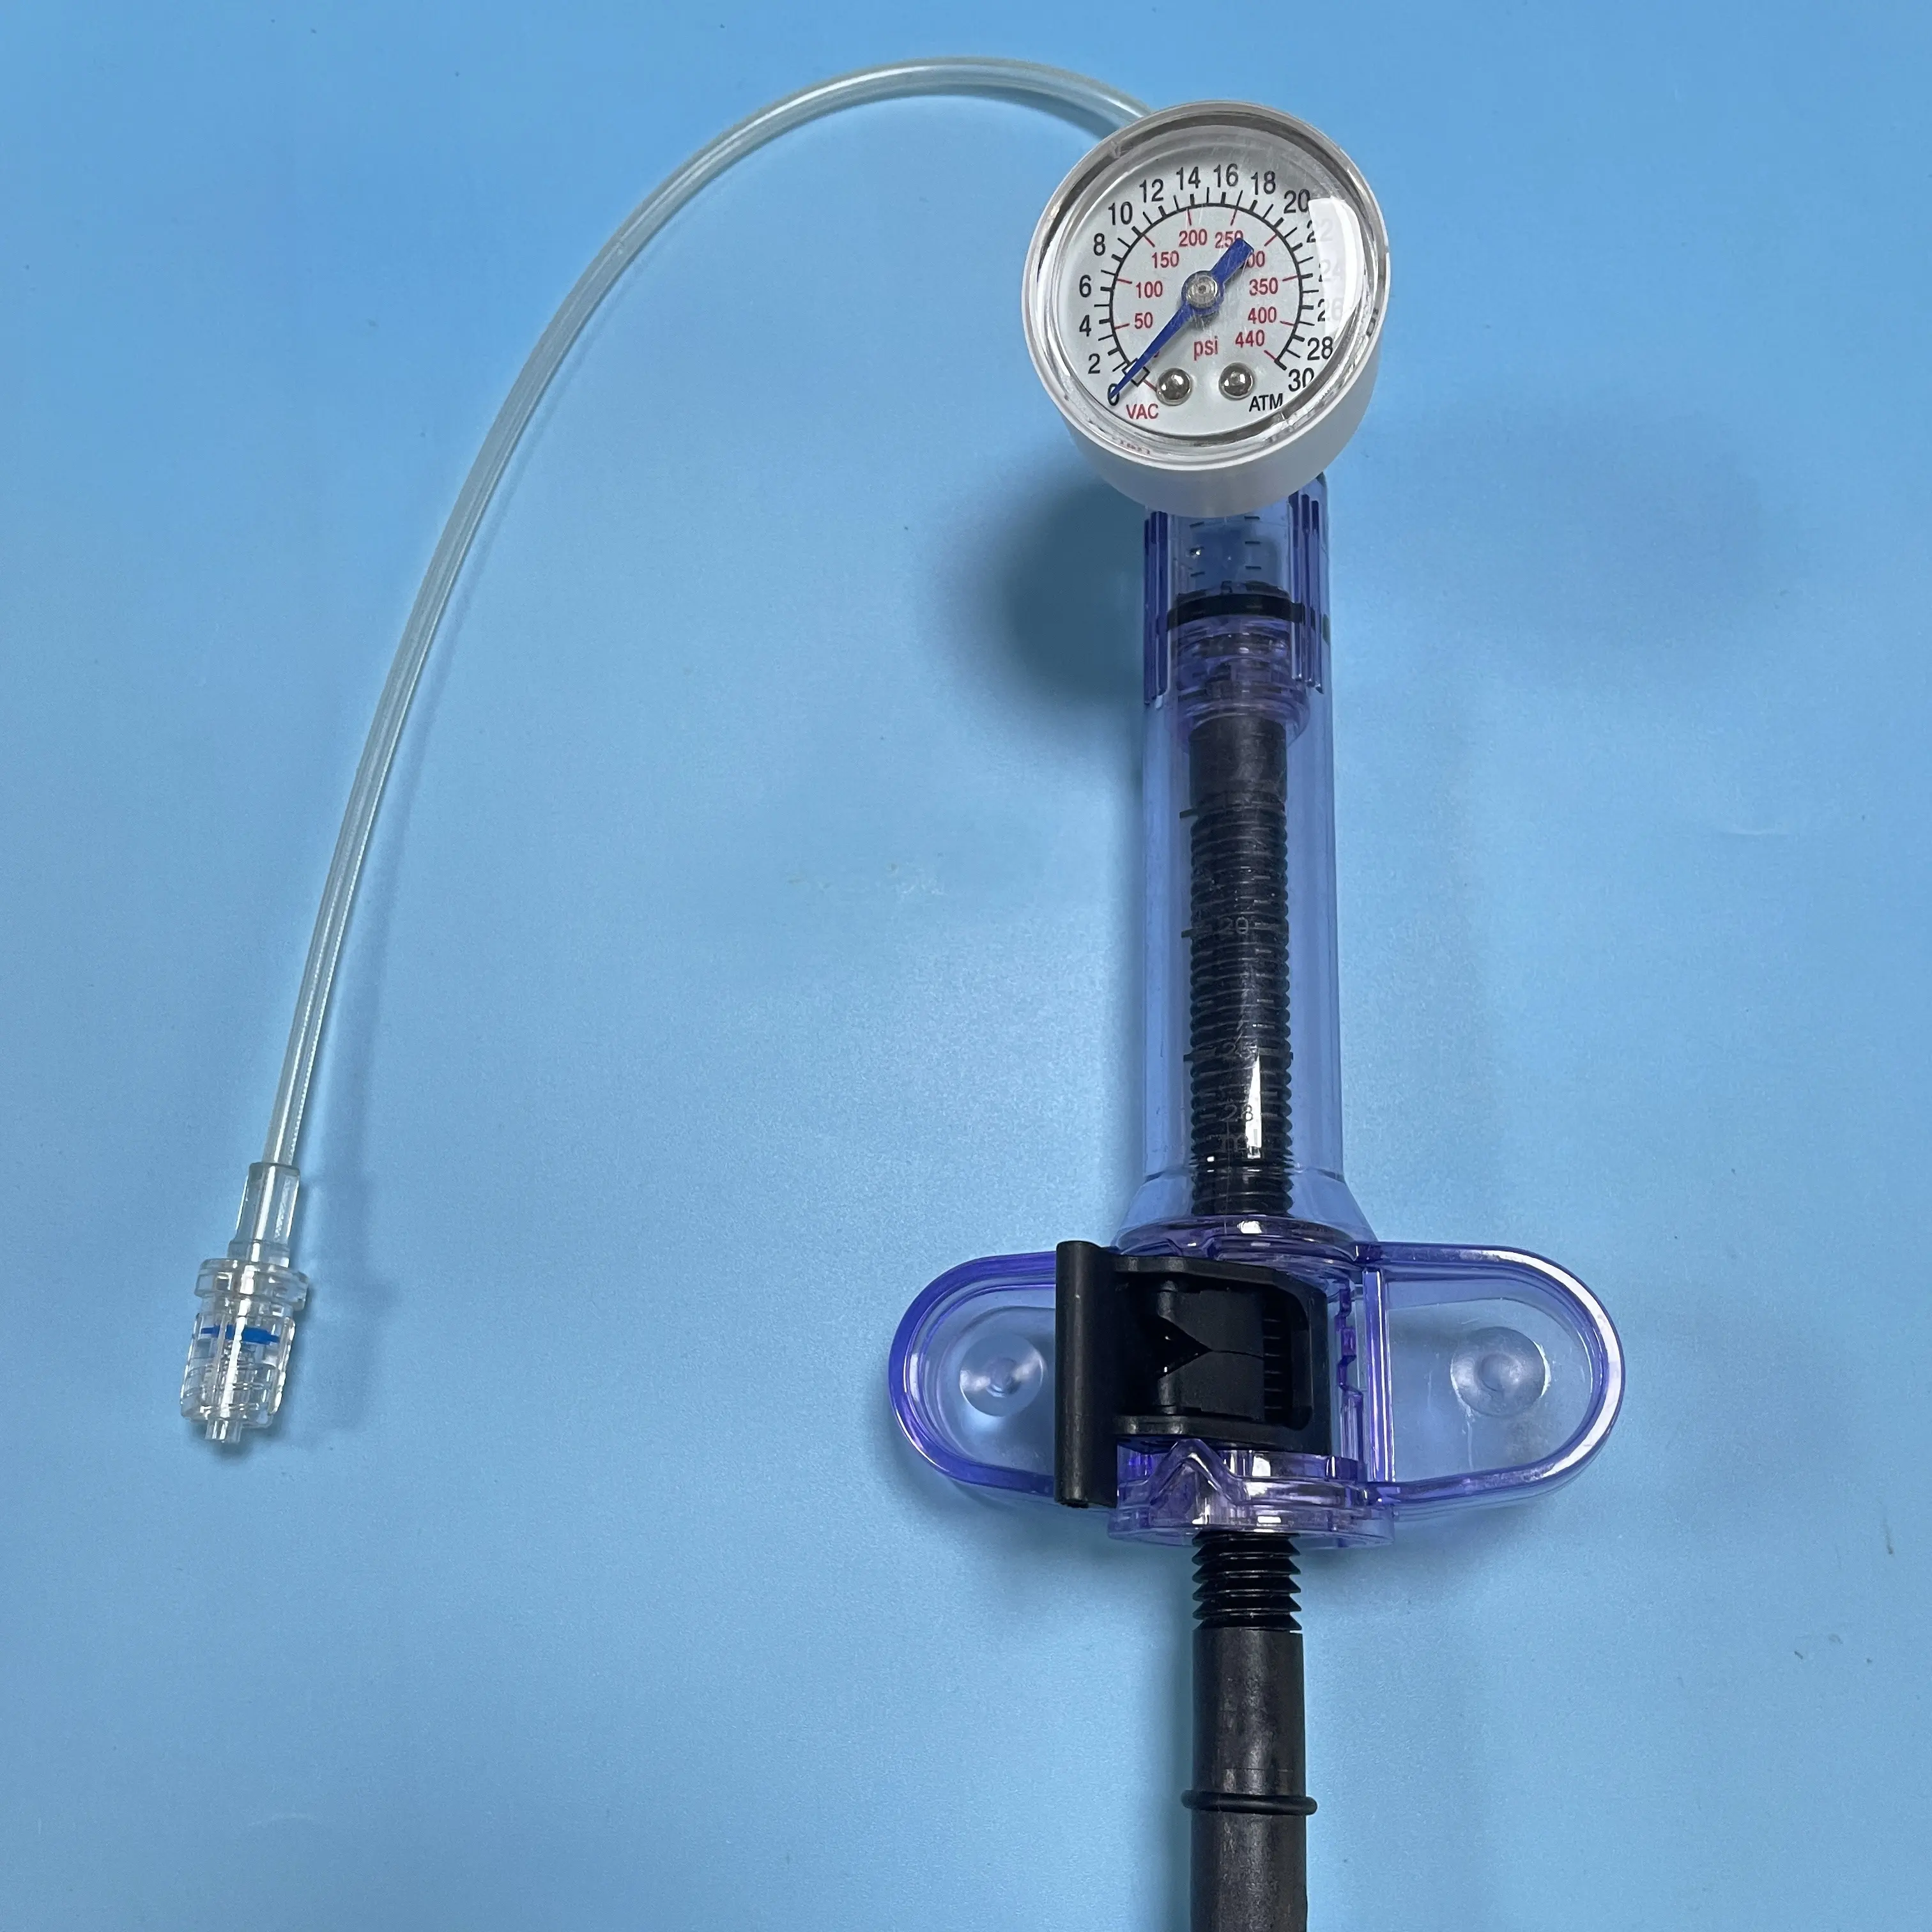 Tianck medical disposable cardiology inflator manual pump hot sale balloon inflation device